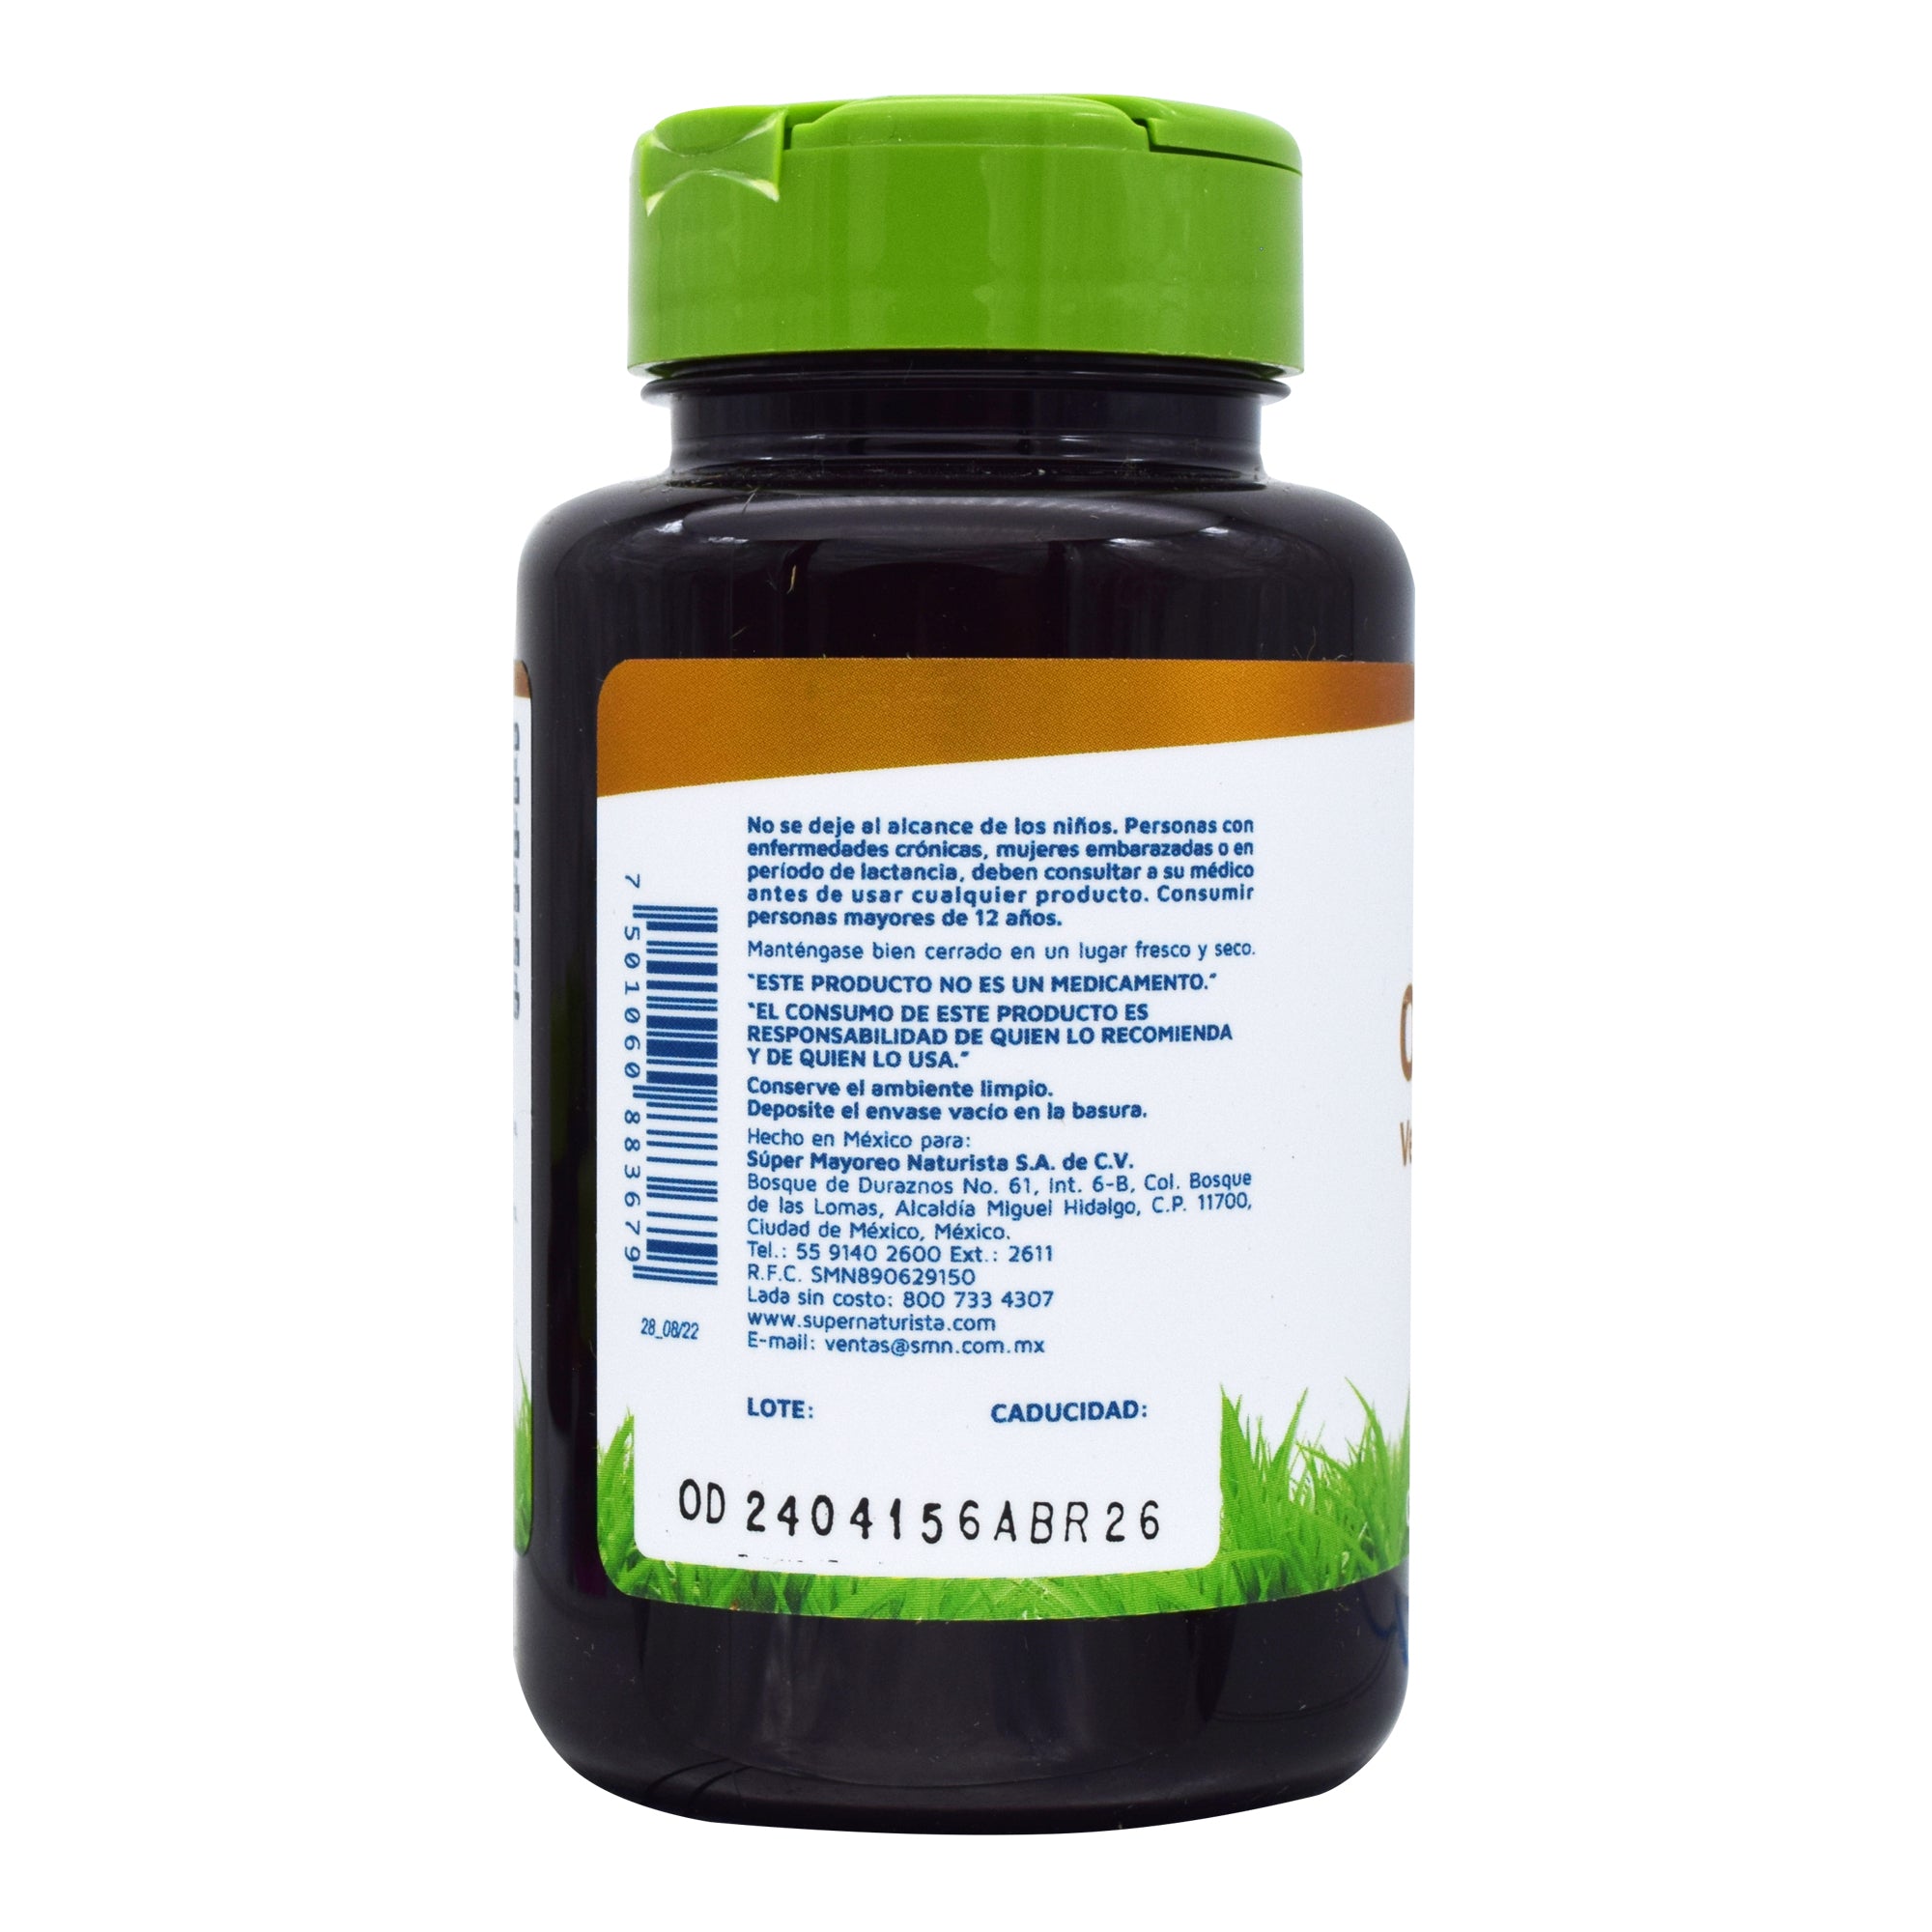 Omega 3 Vegetal/Aceite De Linaza 180 Cap